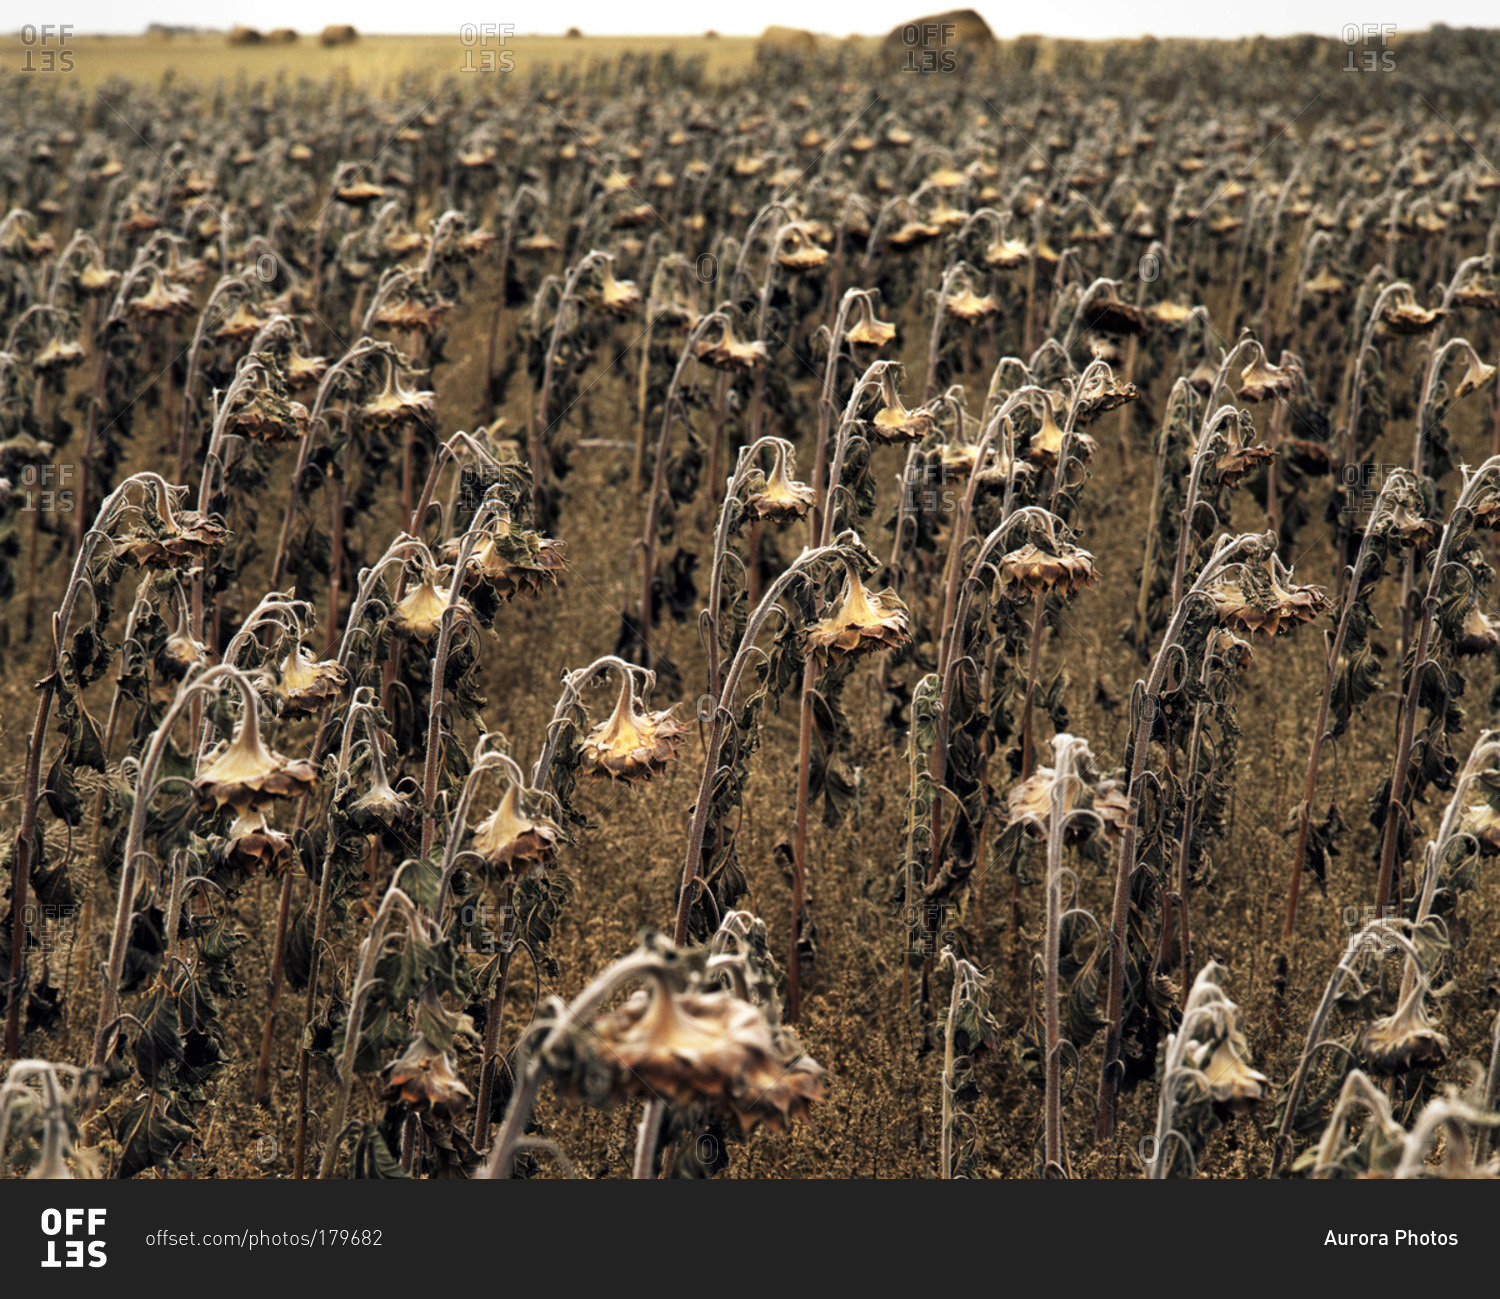 An old dying sunflower field on the Canadian prairies near Conquest, Saskatchewan, Canada